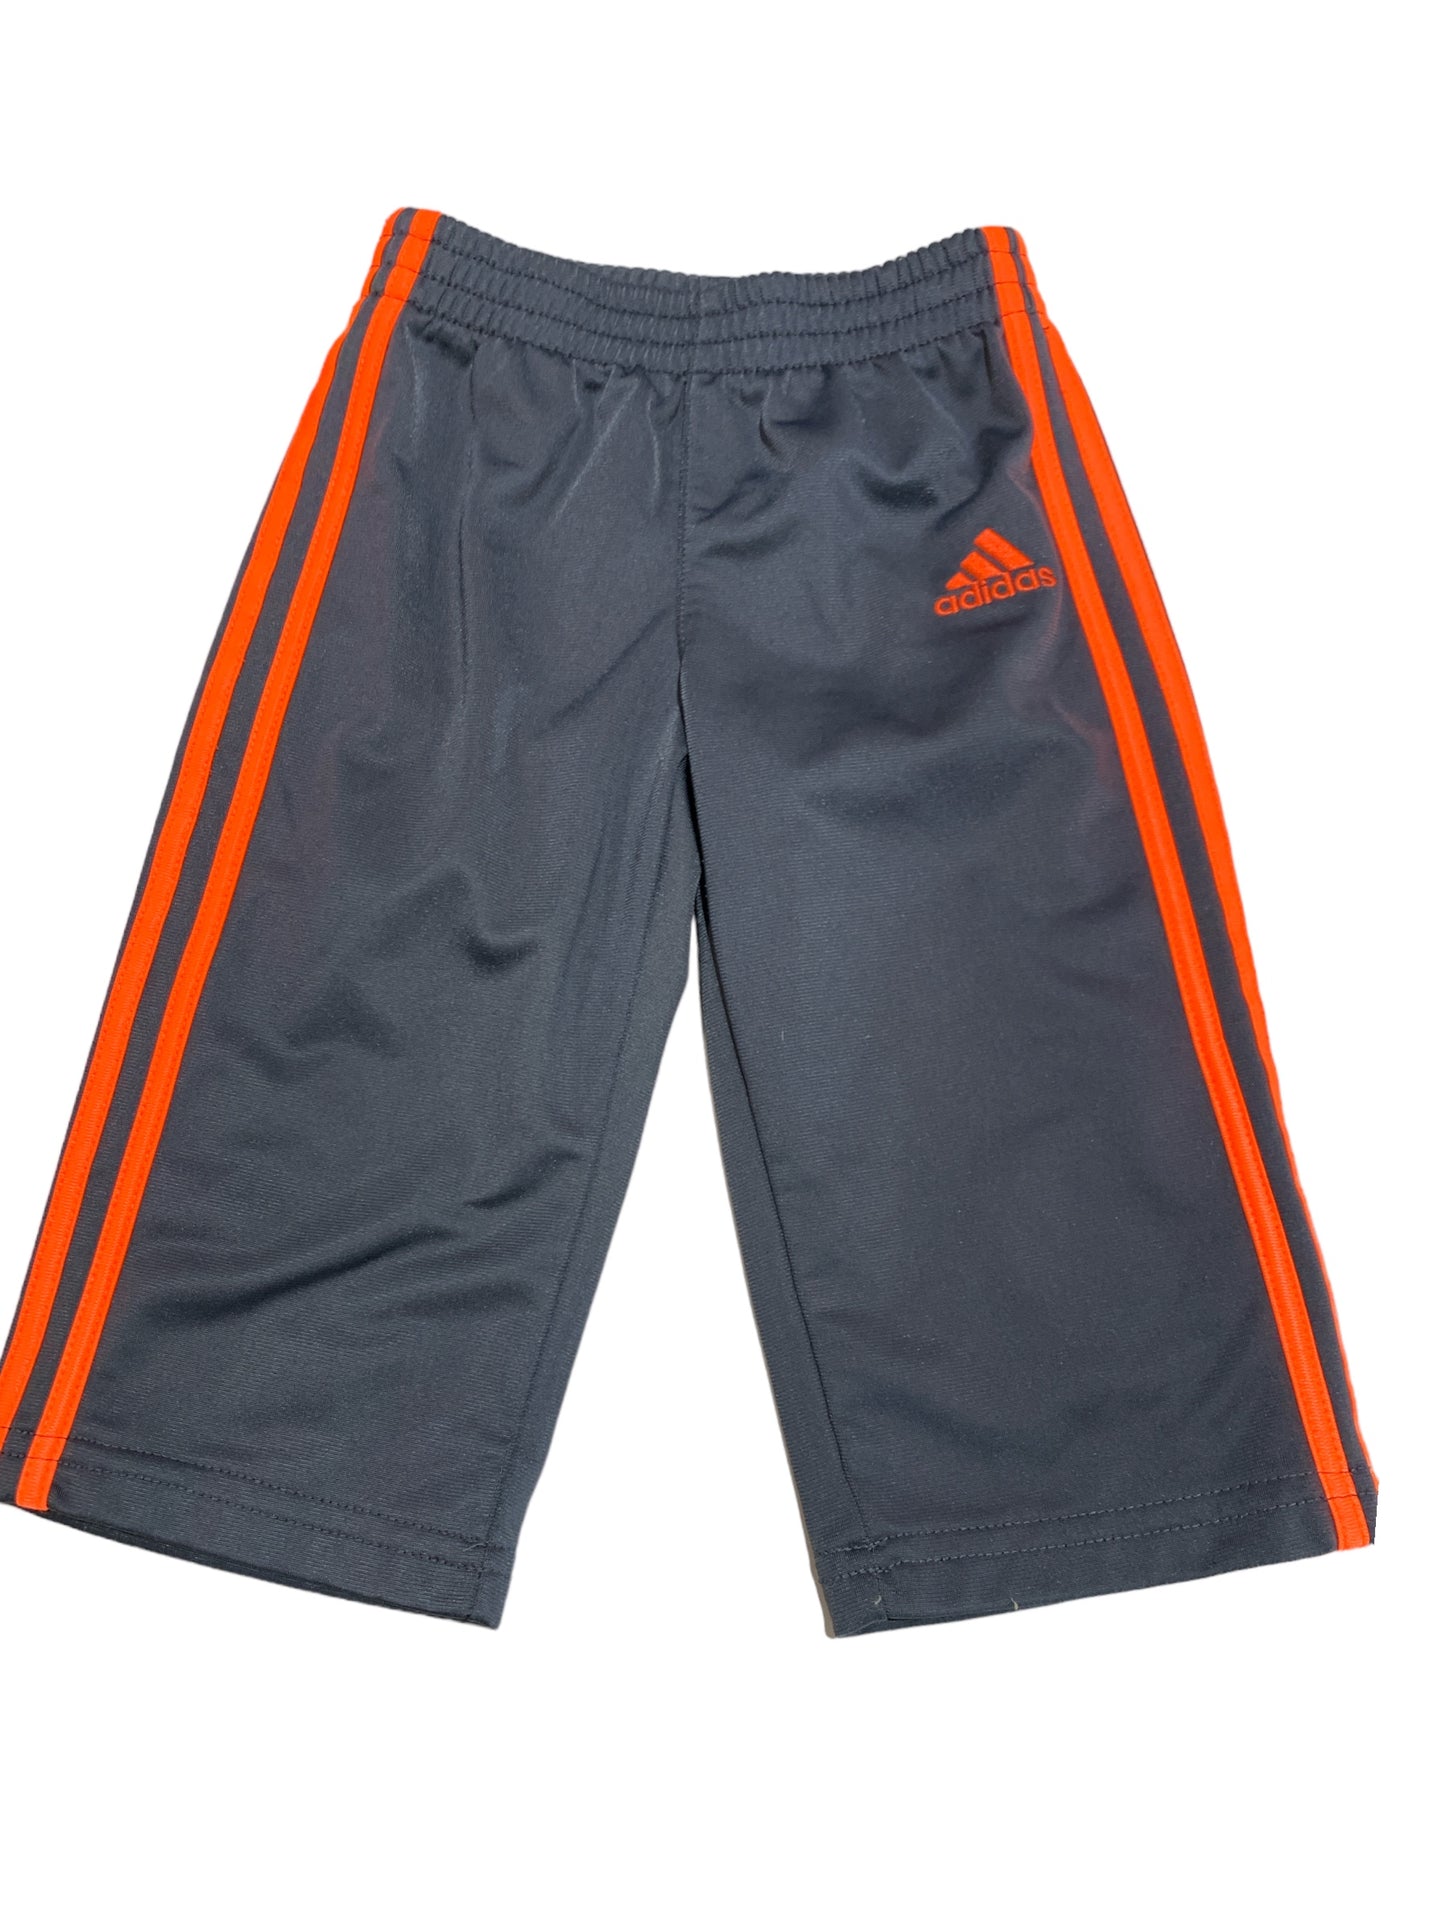 Neon Orange Pants Size 12m